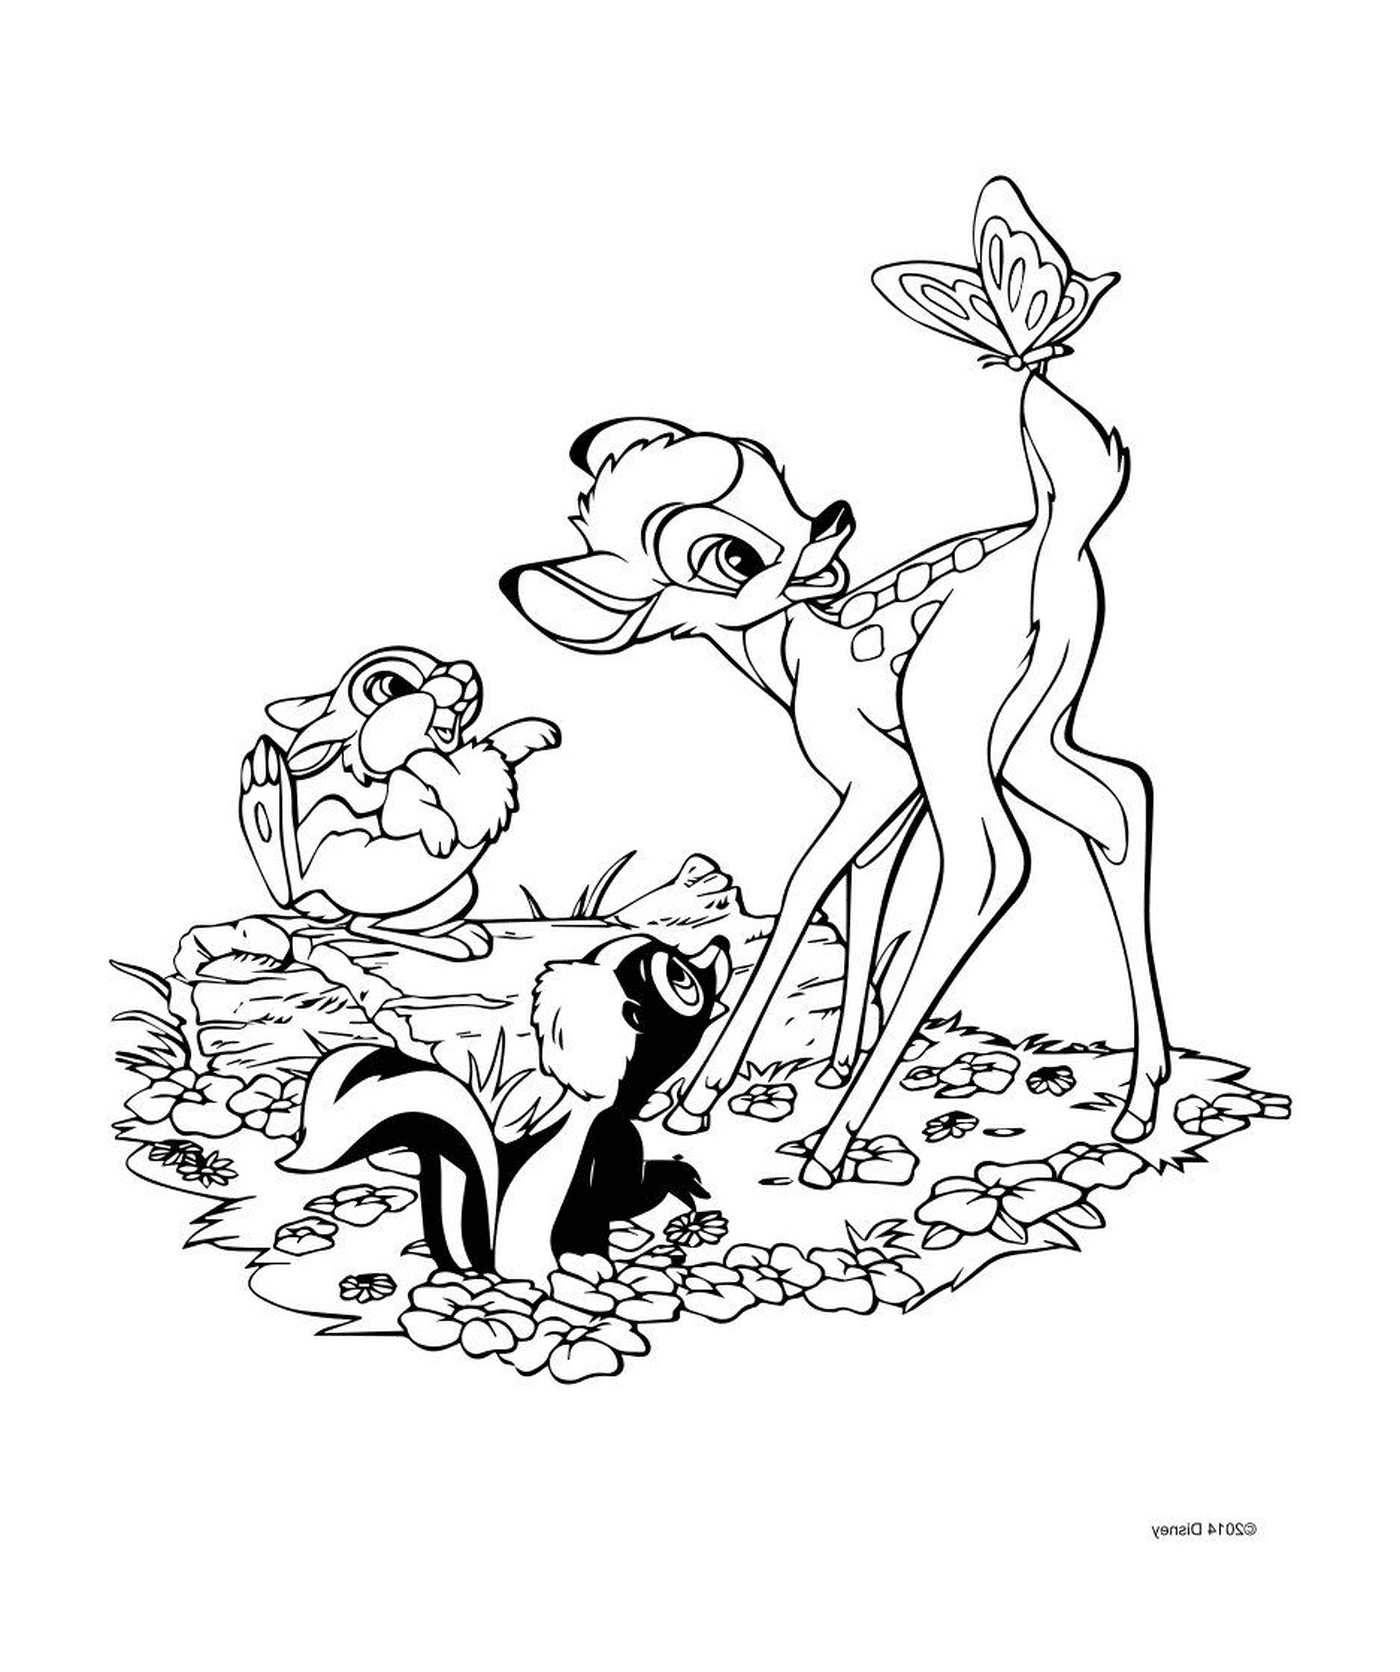   Bambi et Panpan, une amitié maladroite 